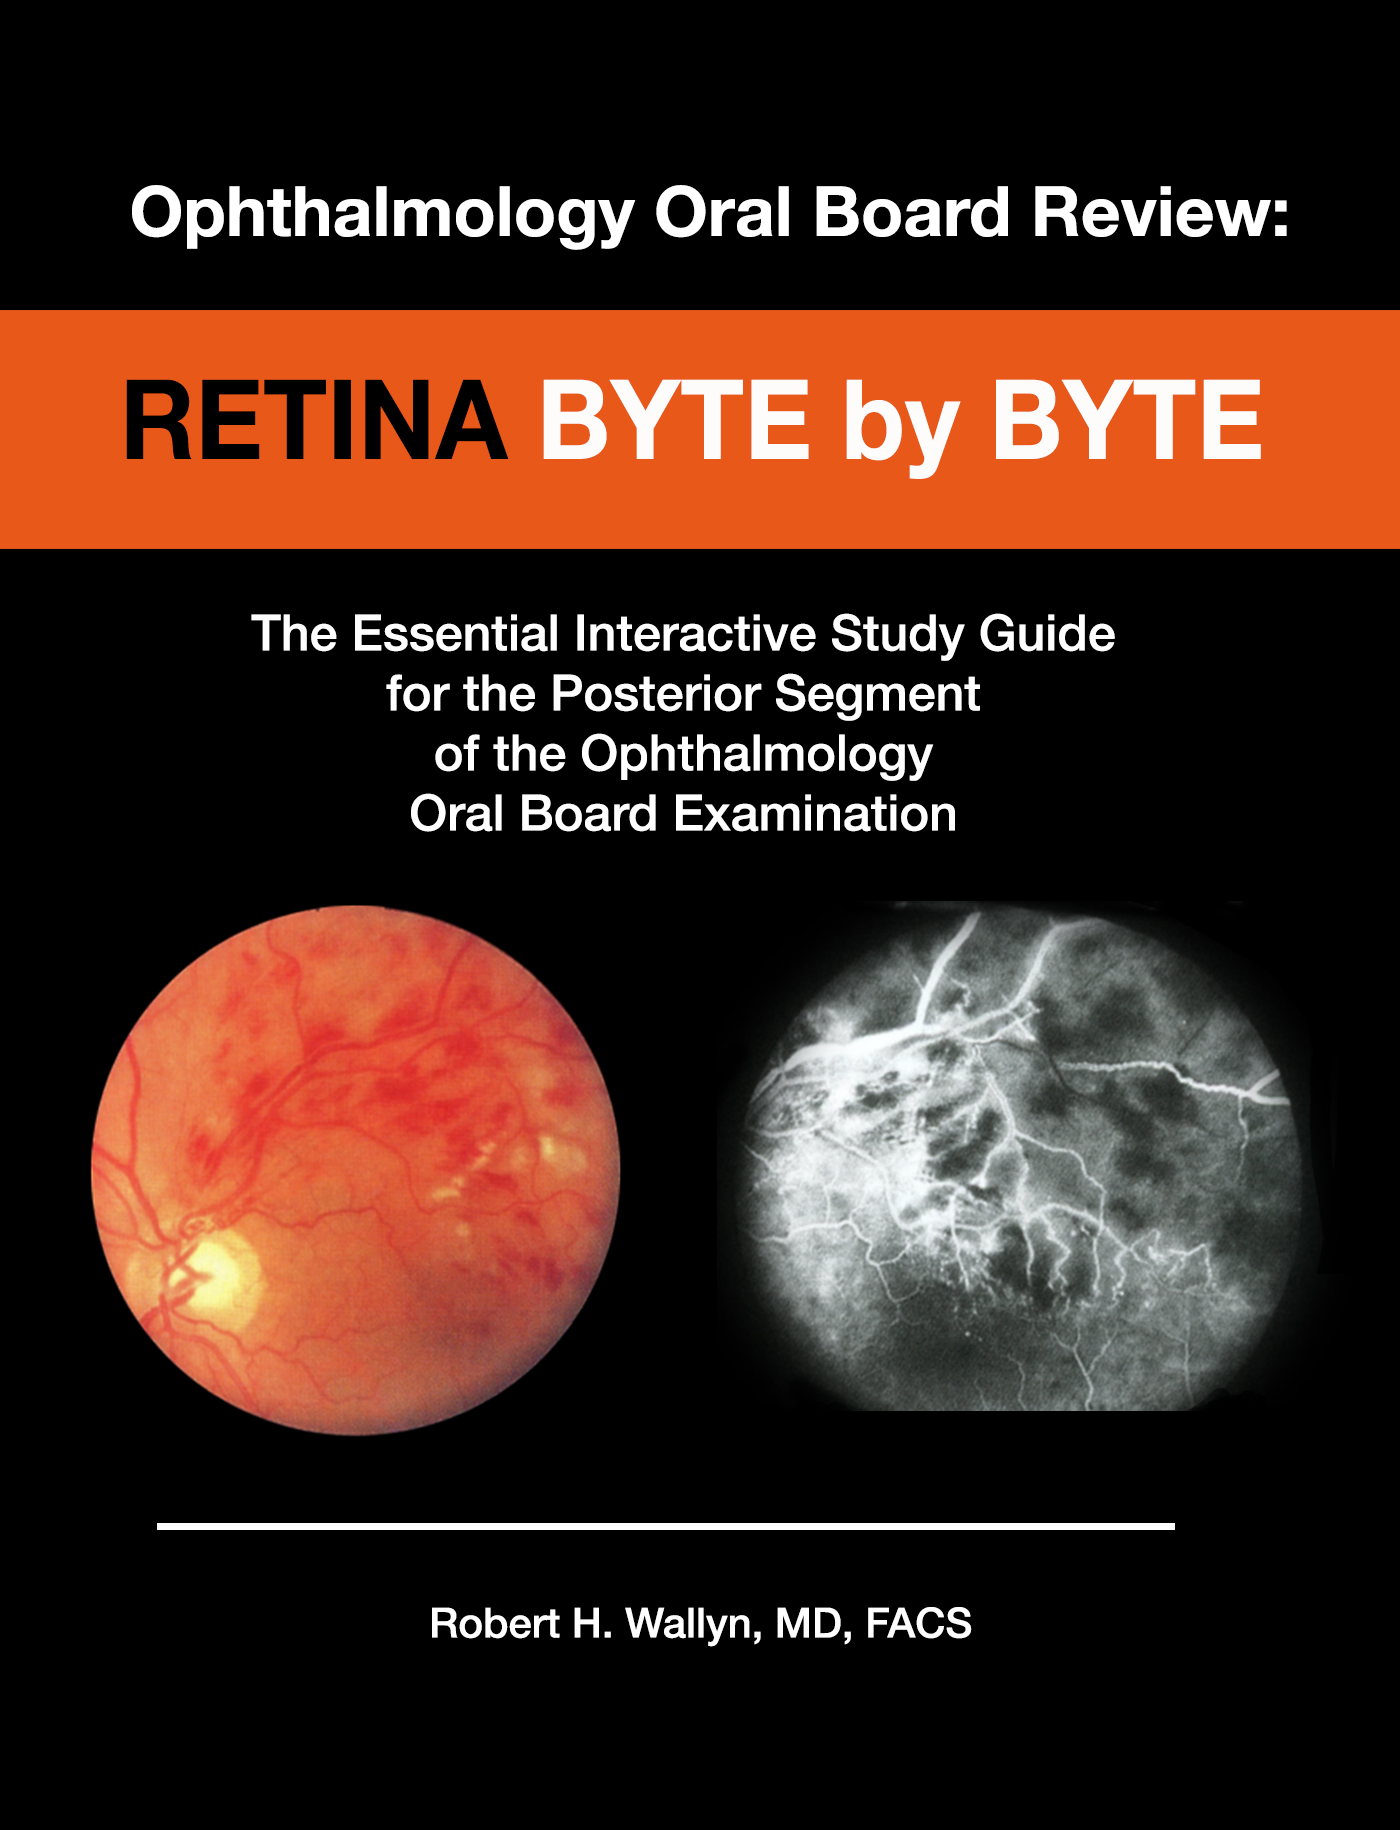 Retina: Byte by Byte by Robert H. Wallyn, MD, FACS